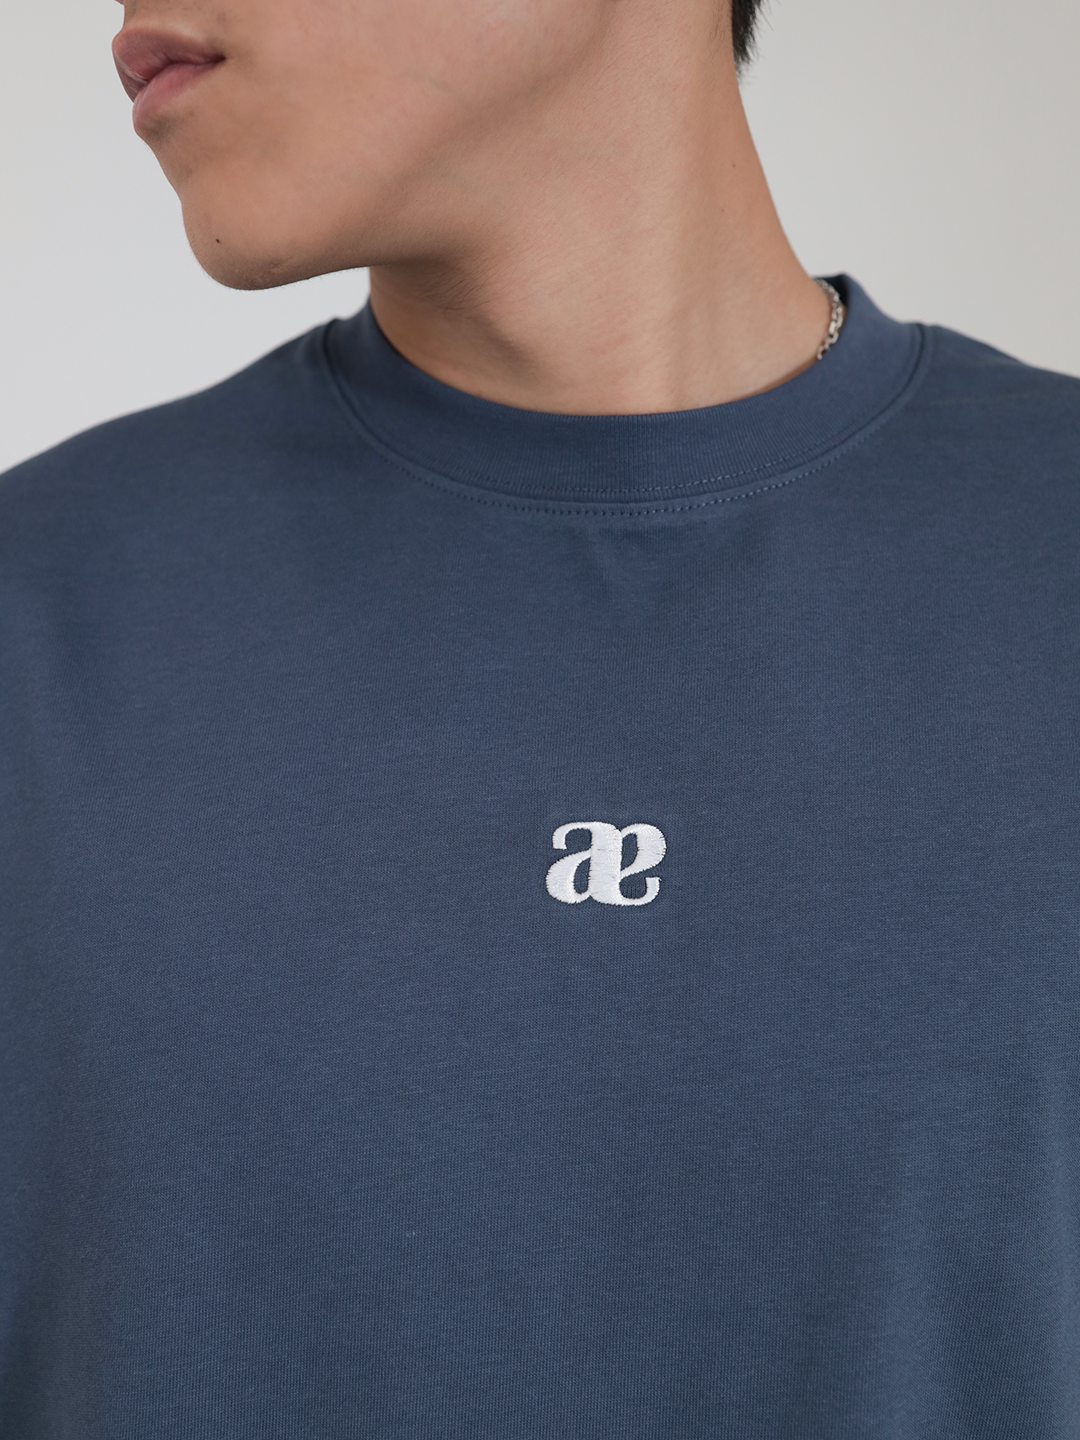 Anagram Embroidered Men’s Cotton T-shirt (Navy)